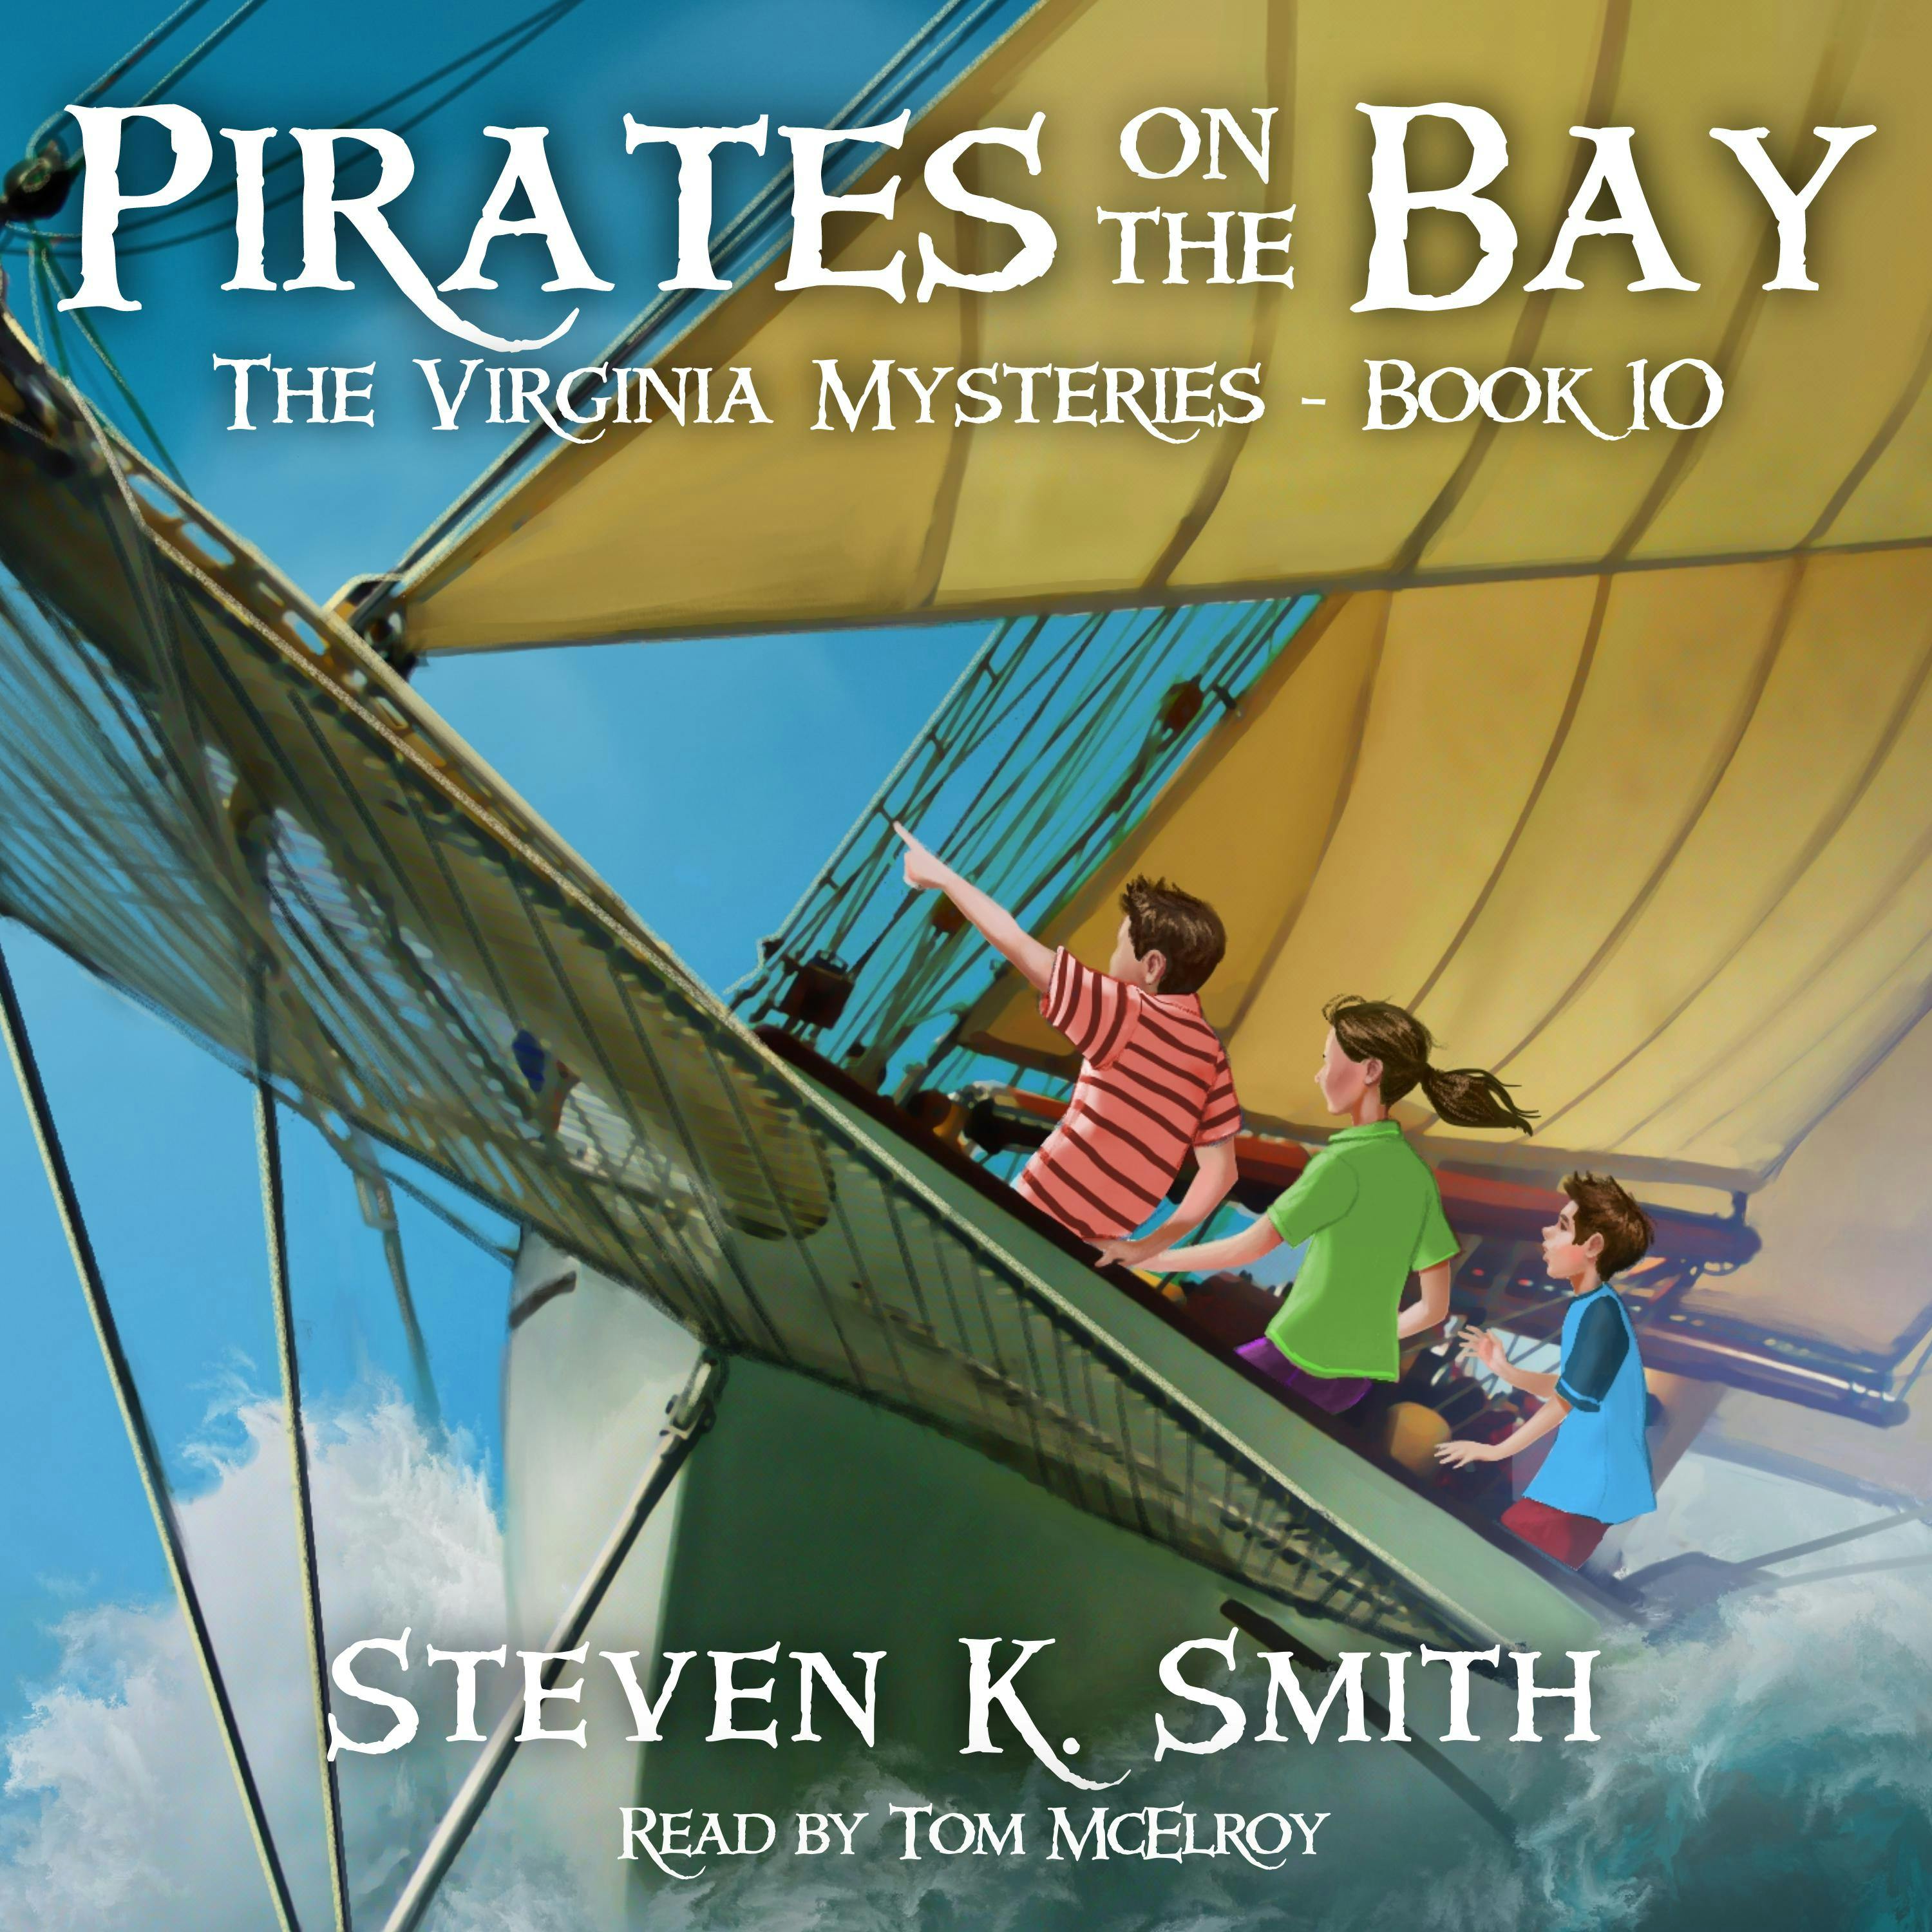 Pirates on the Bay - Steven K. Smith